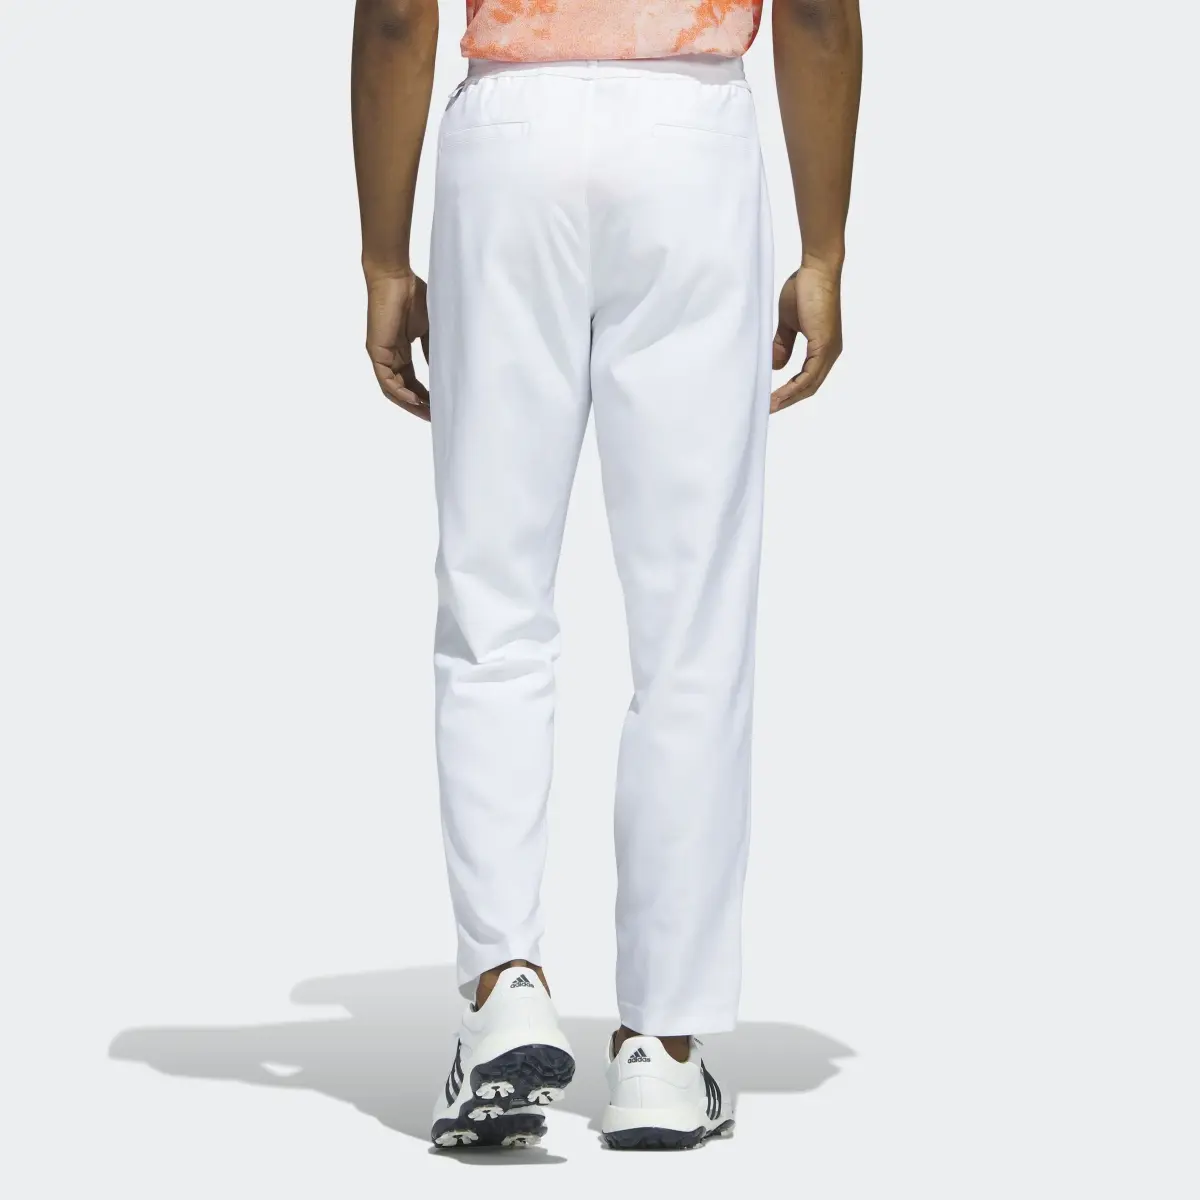 Adidas Made To Be Remade Pintuck Golf Pants. 2